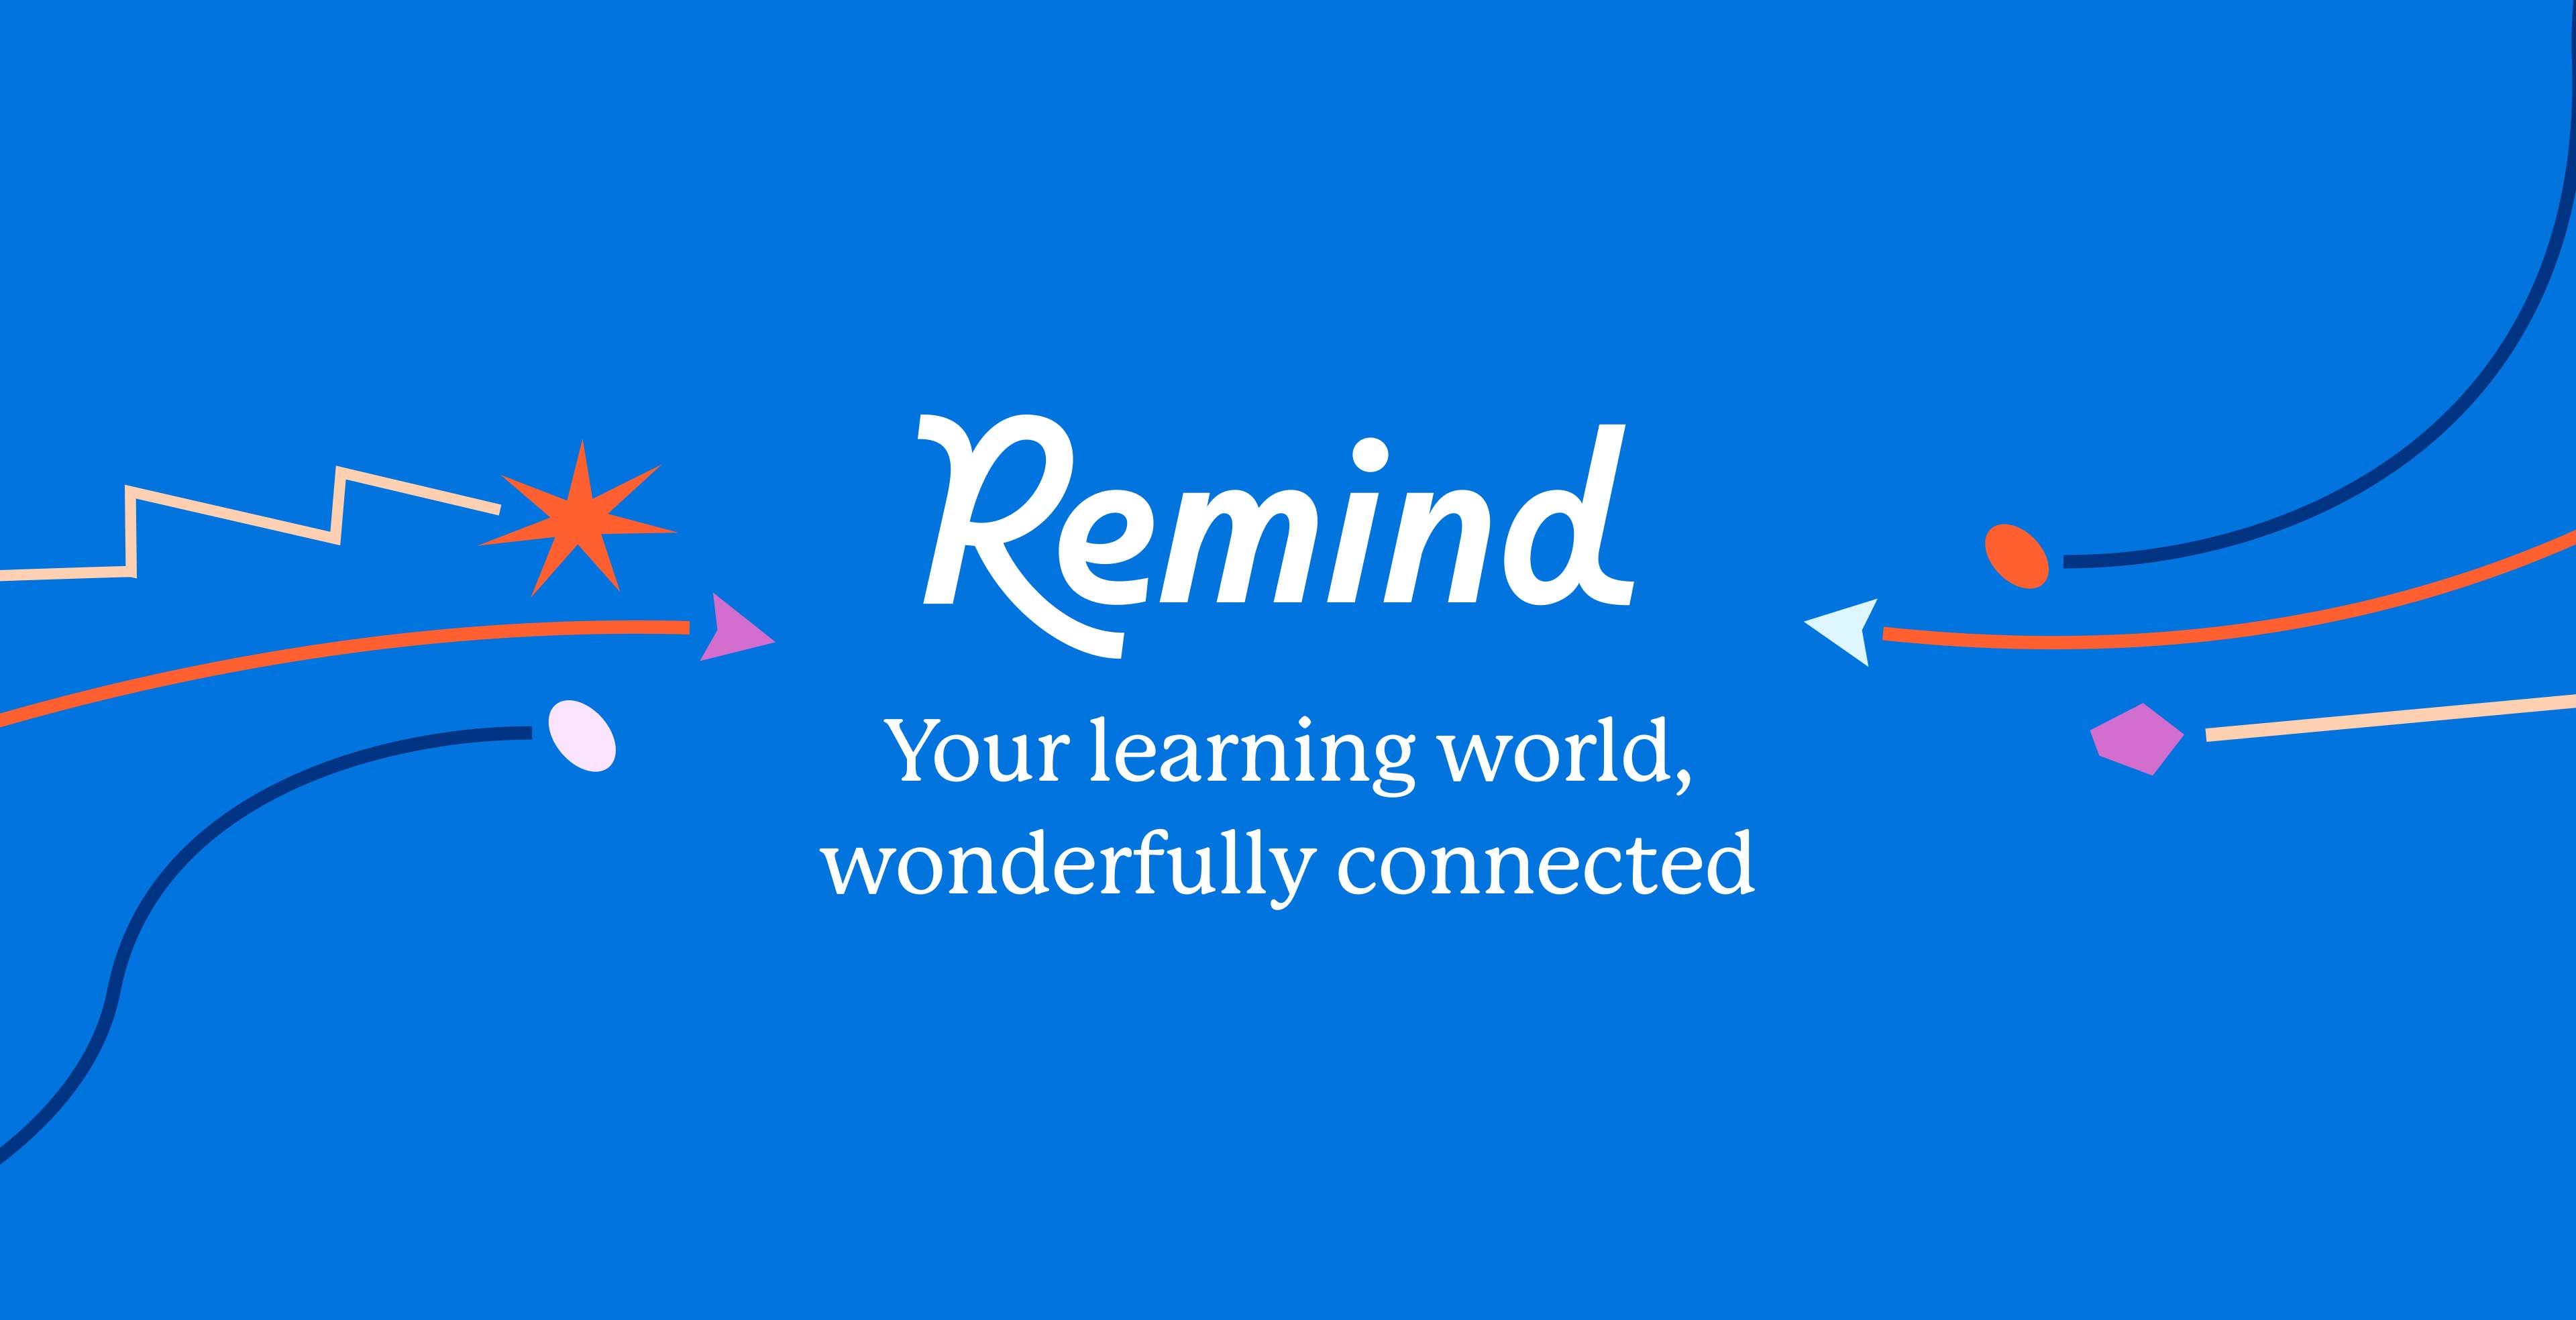 Remind learning platform rebrand by Hoodzpah